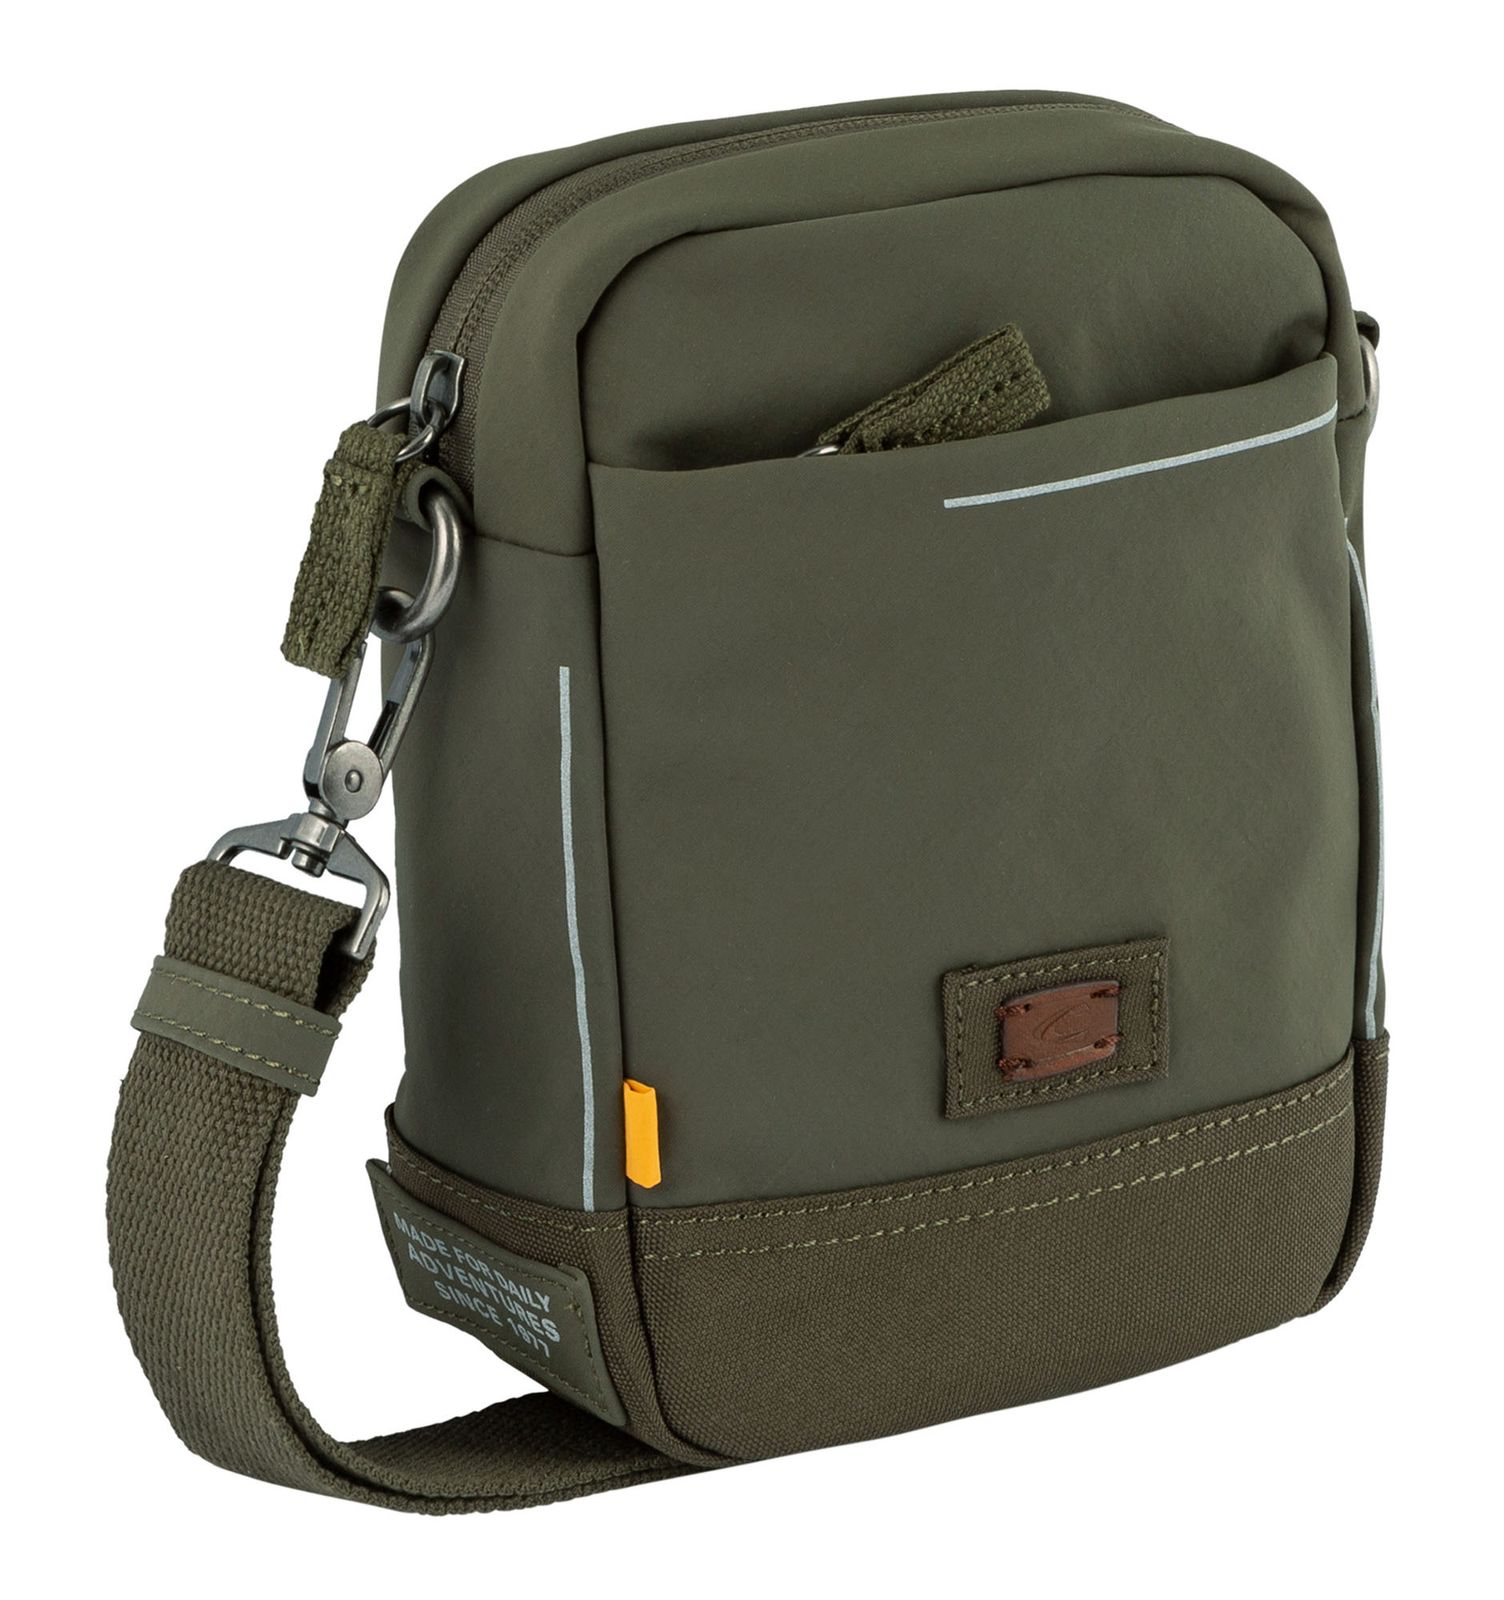 | Cross bags, & online Khaki BB Bag body Buy XS purses cross City bag modeherz active | accessories camel